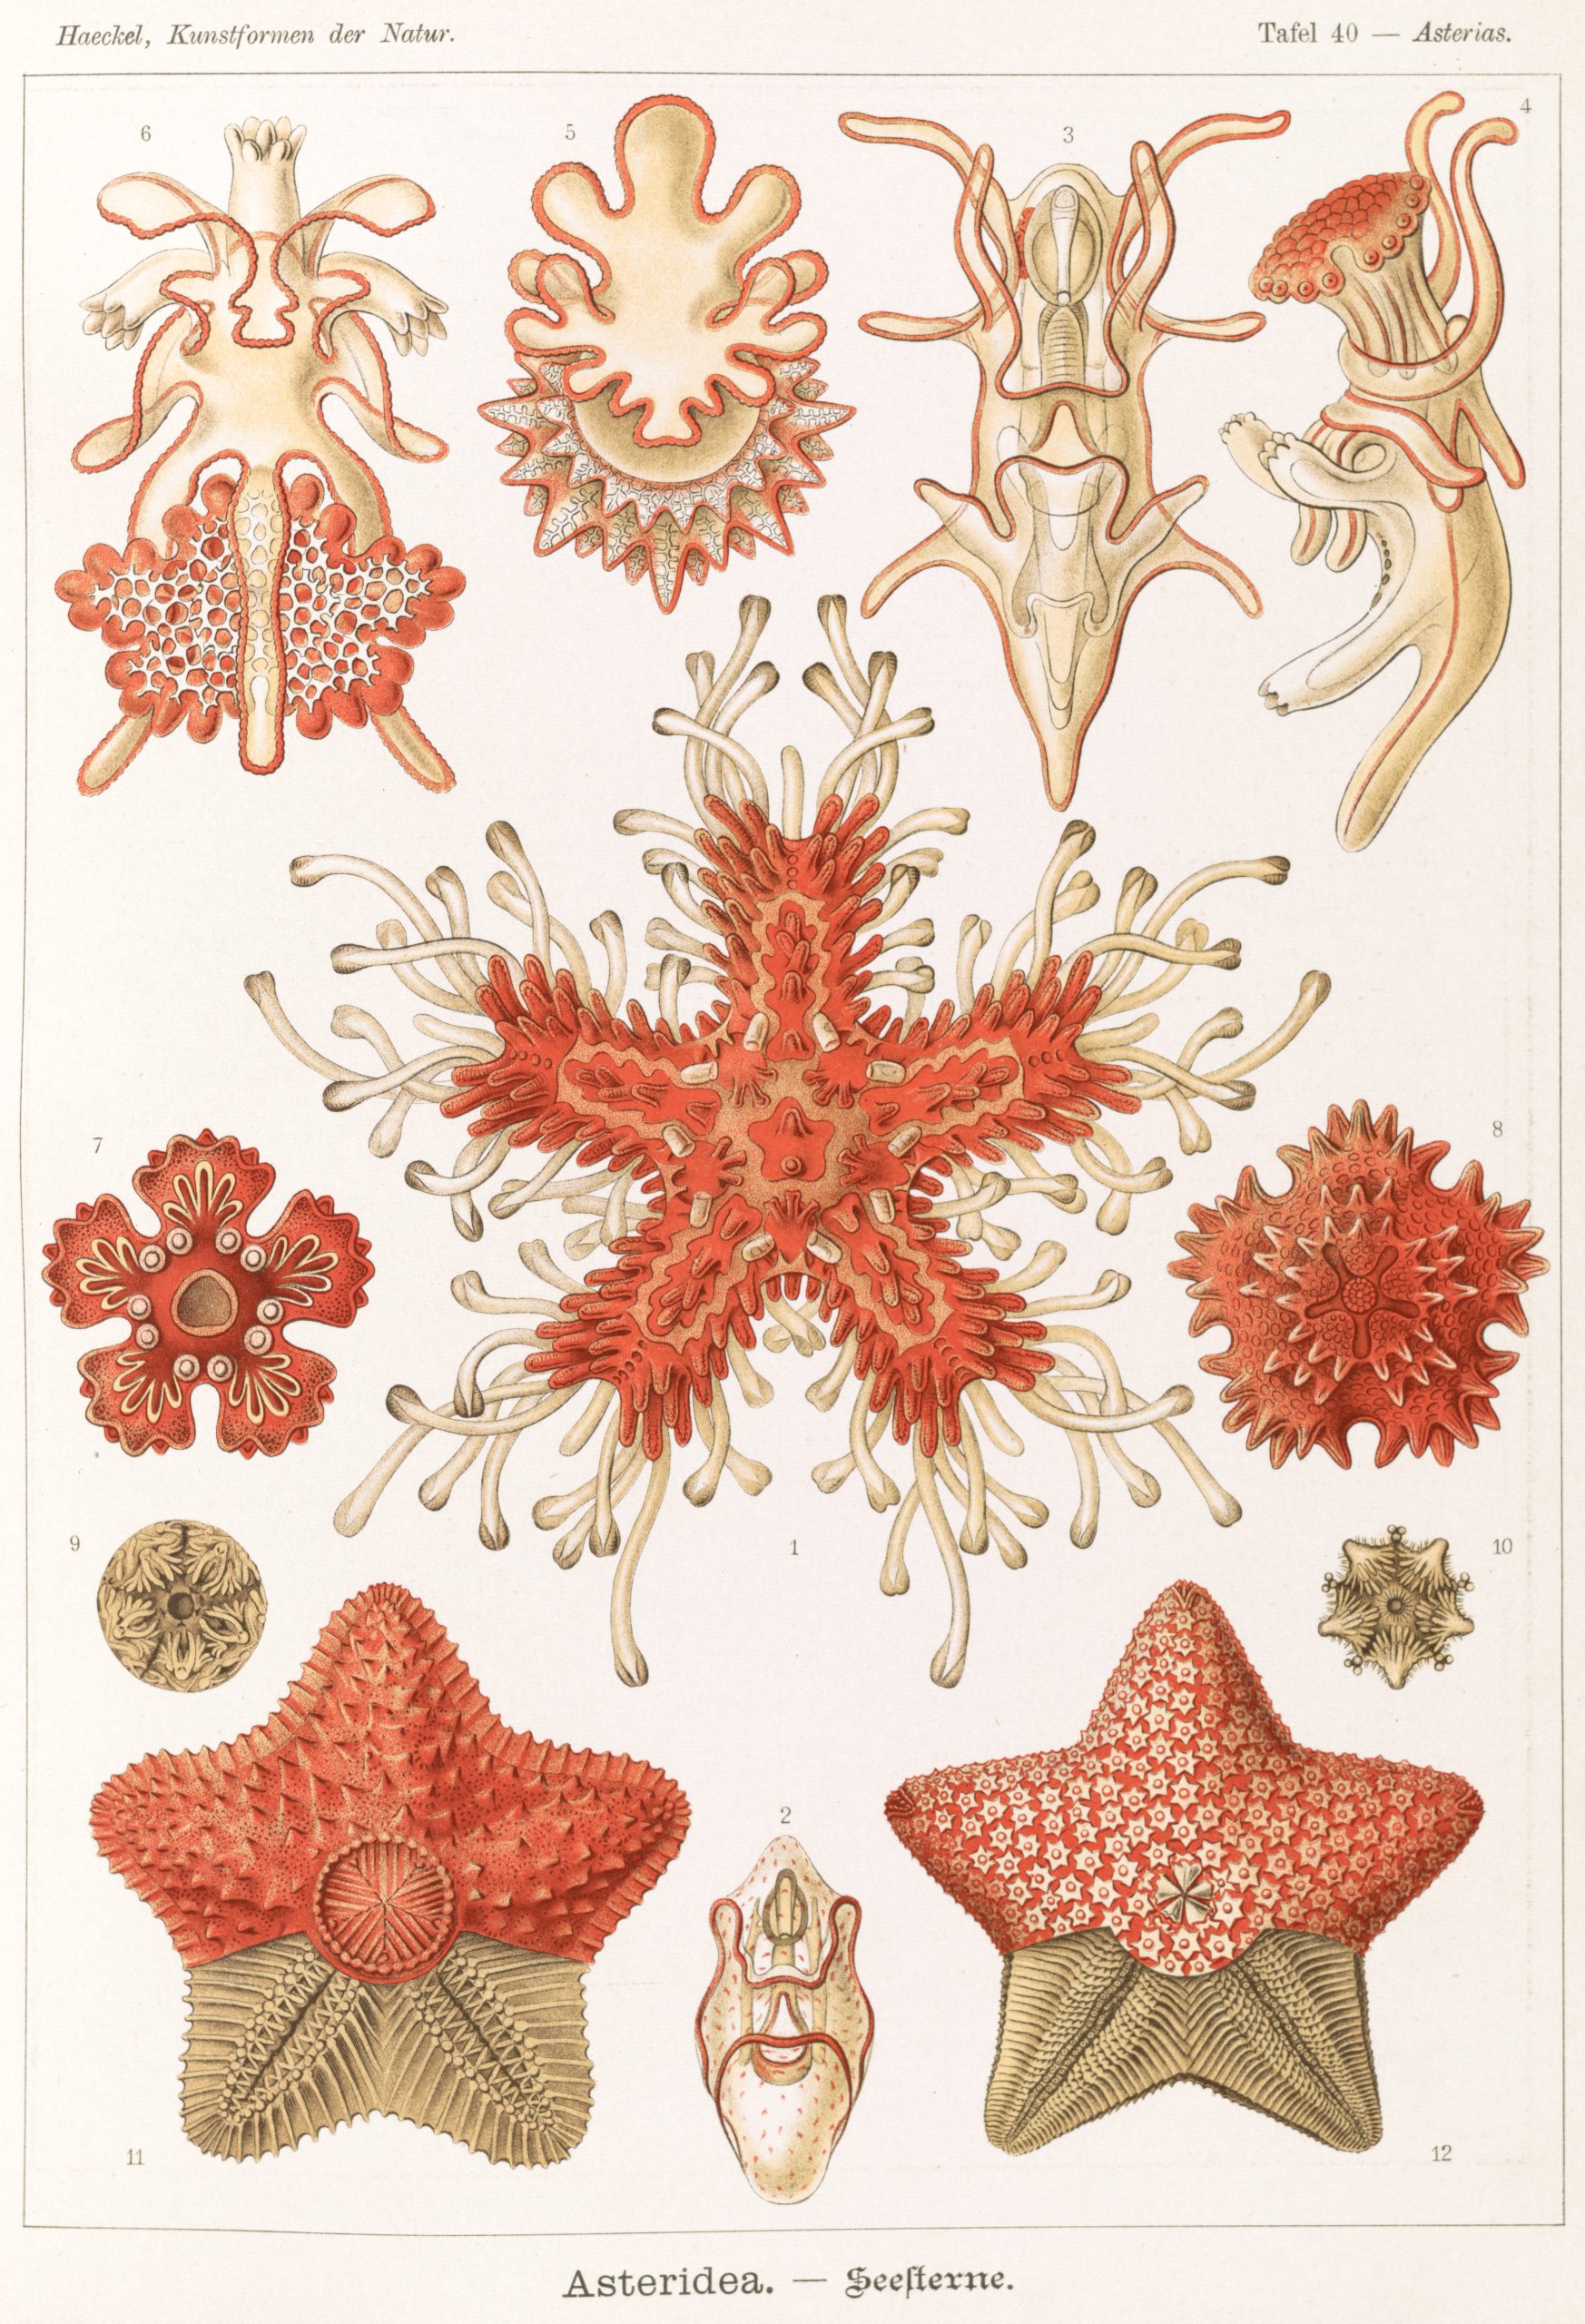 A scientific illustration of various starfish